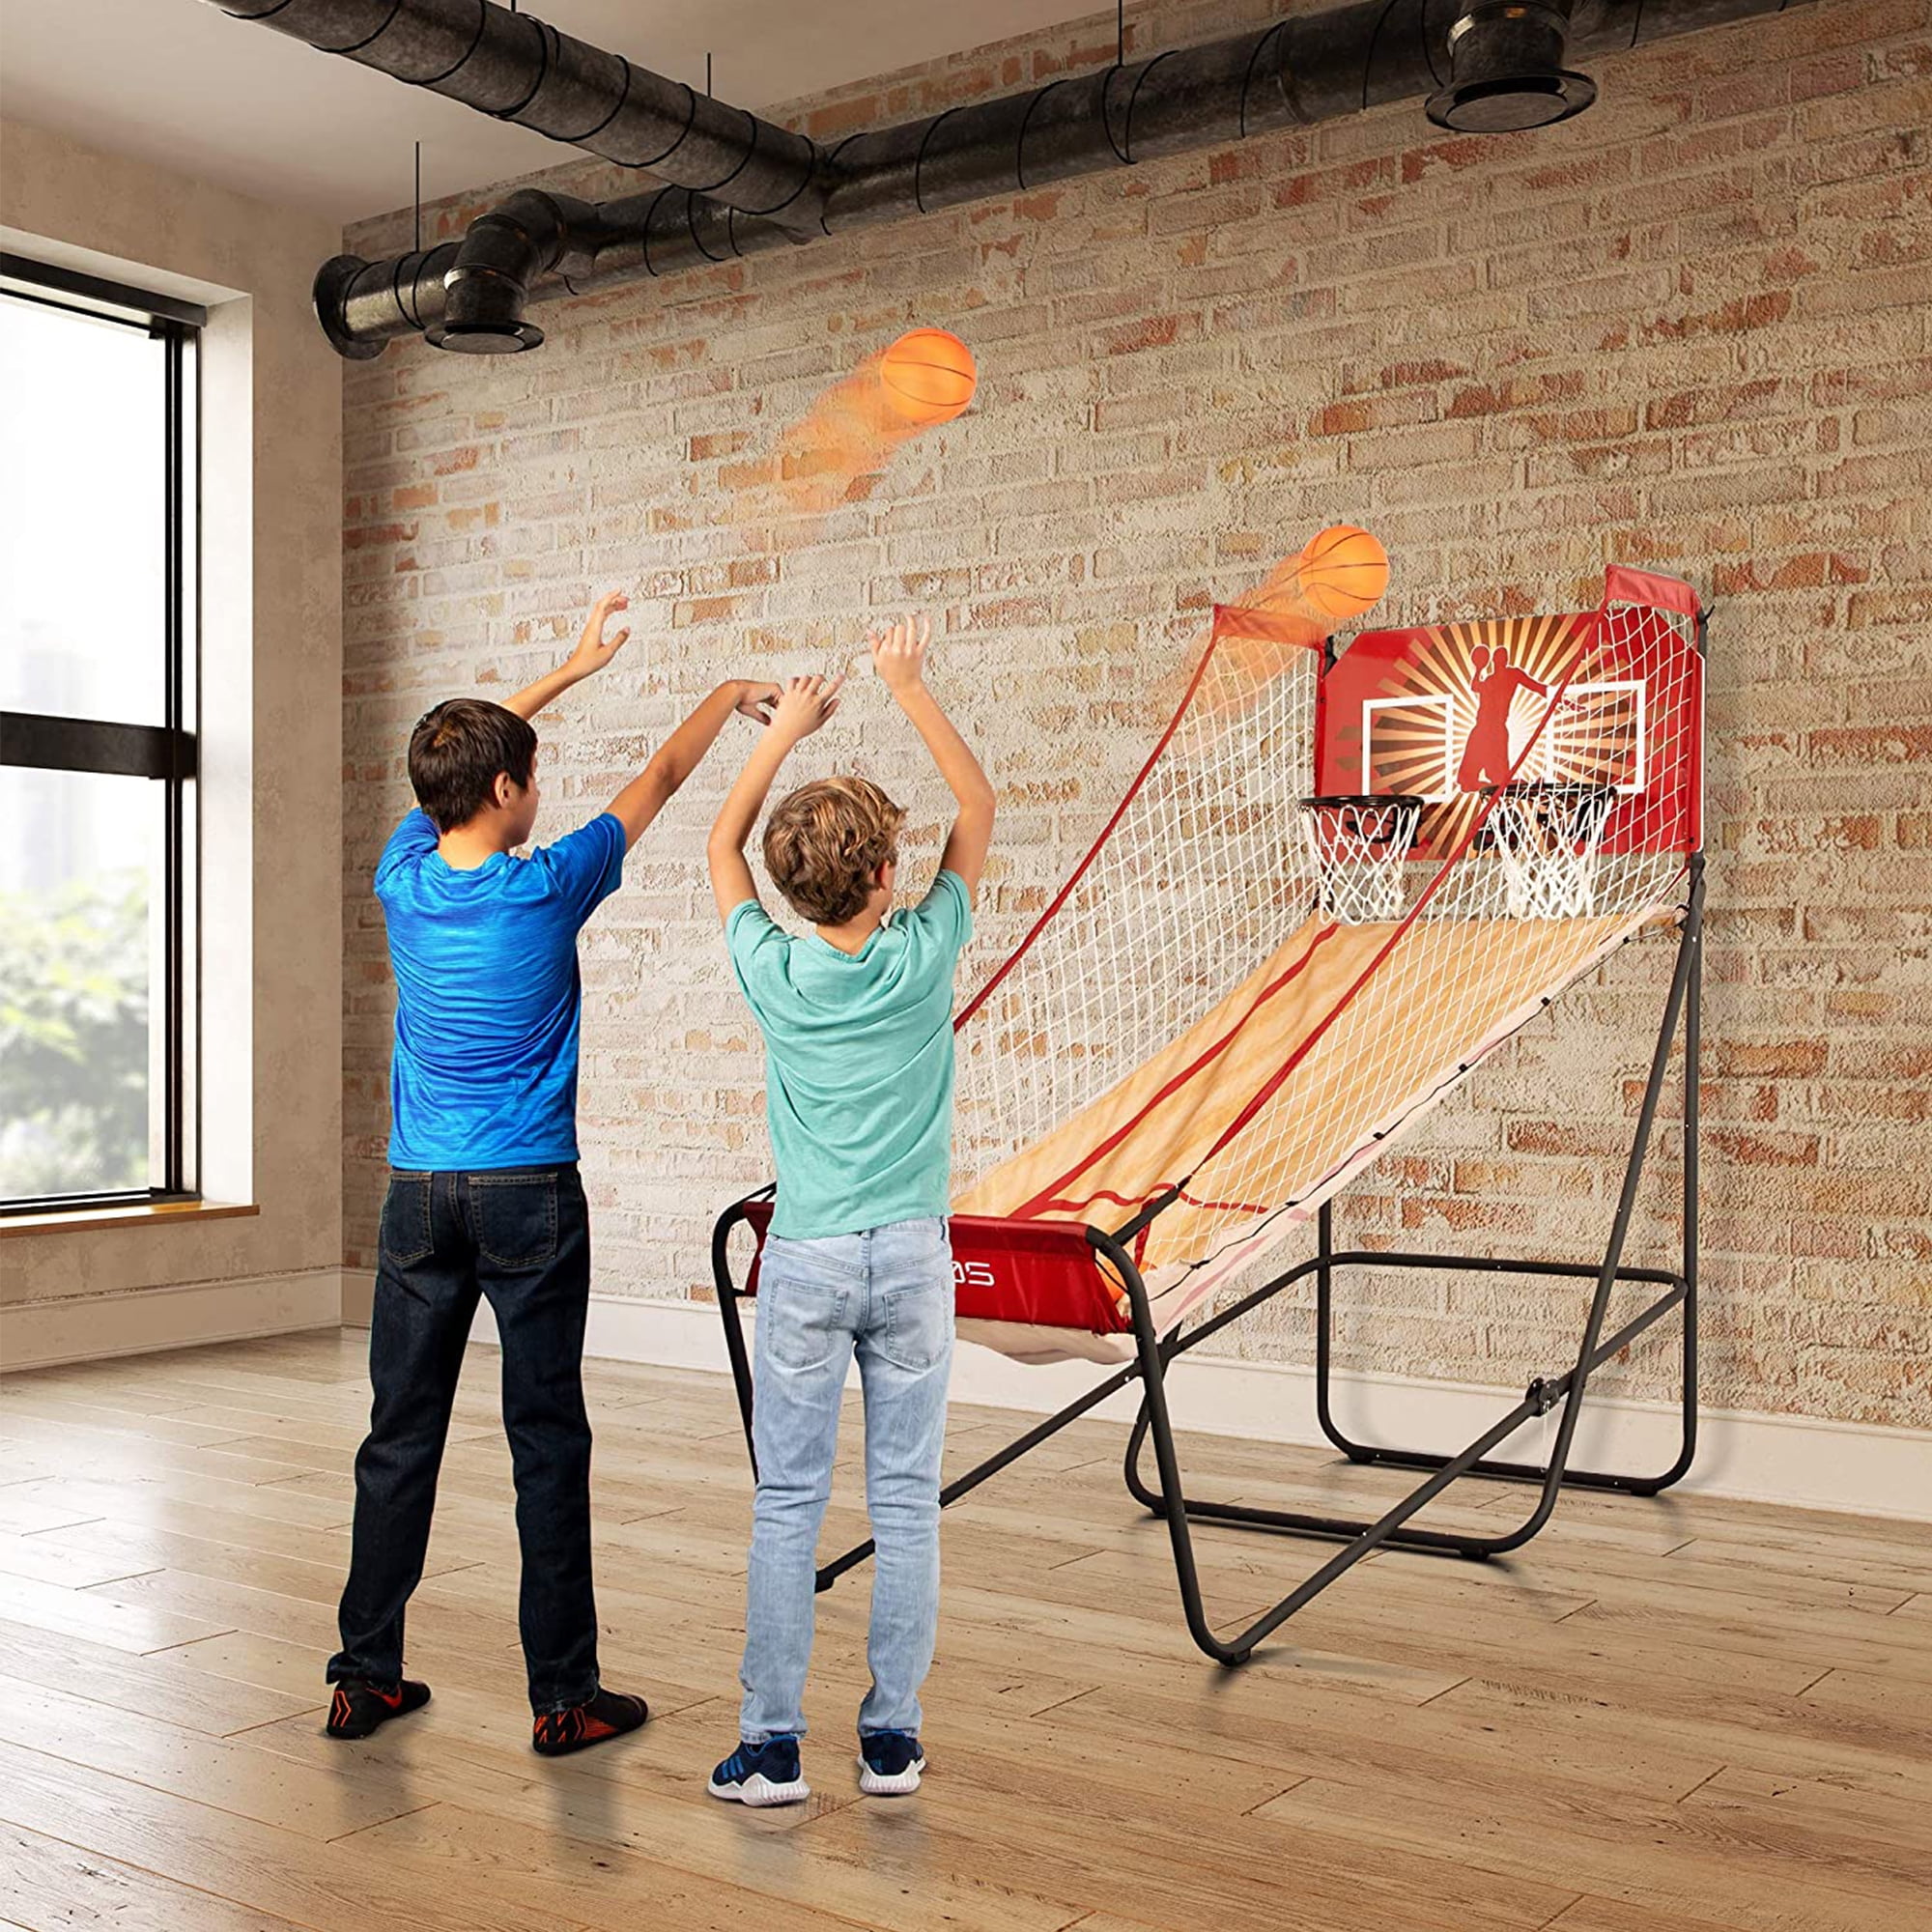 Double Electronic Hoop Shot Lanos Basketball Arcade Game 2 Player or 1 Player, 